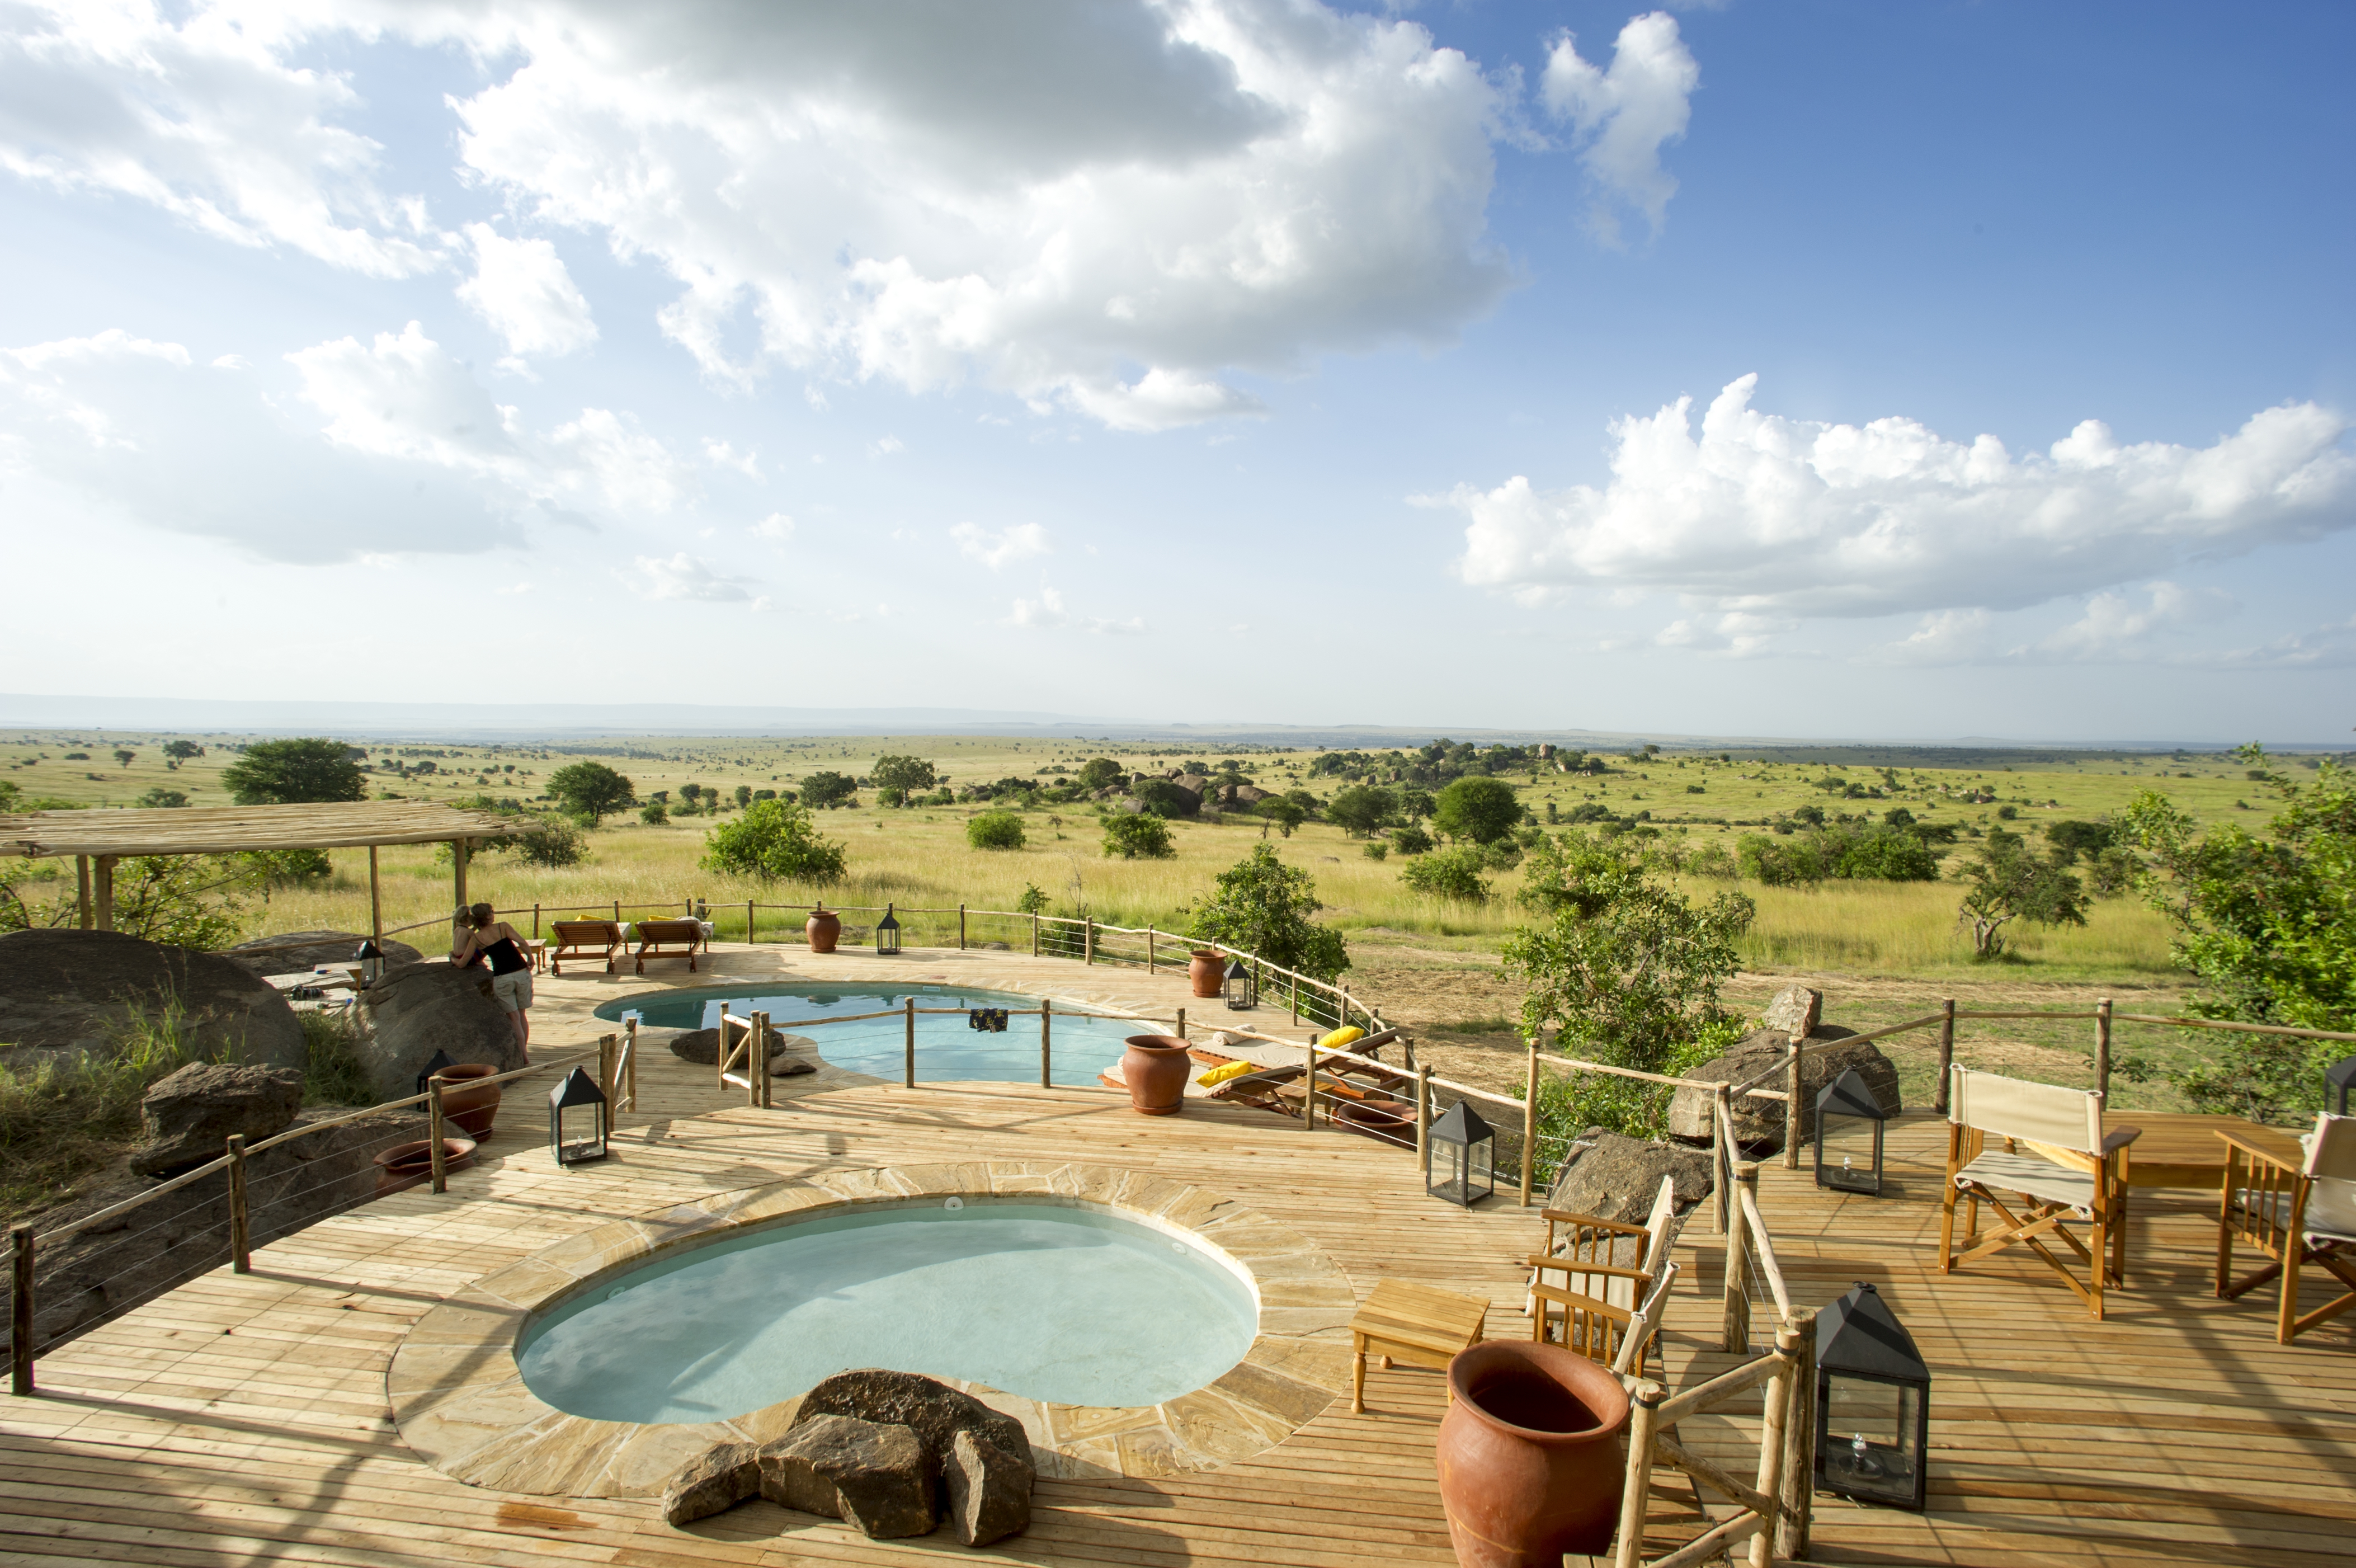 Pool Deck, Mkombe's House, The Serengeti, Tanzania